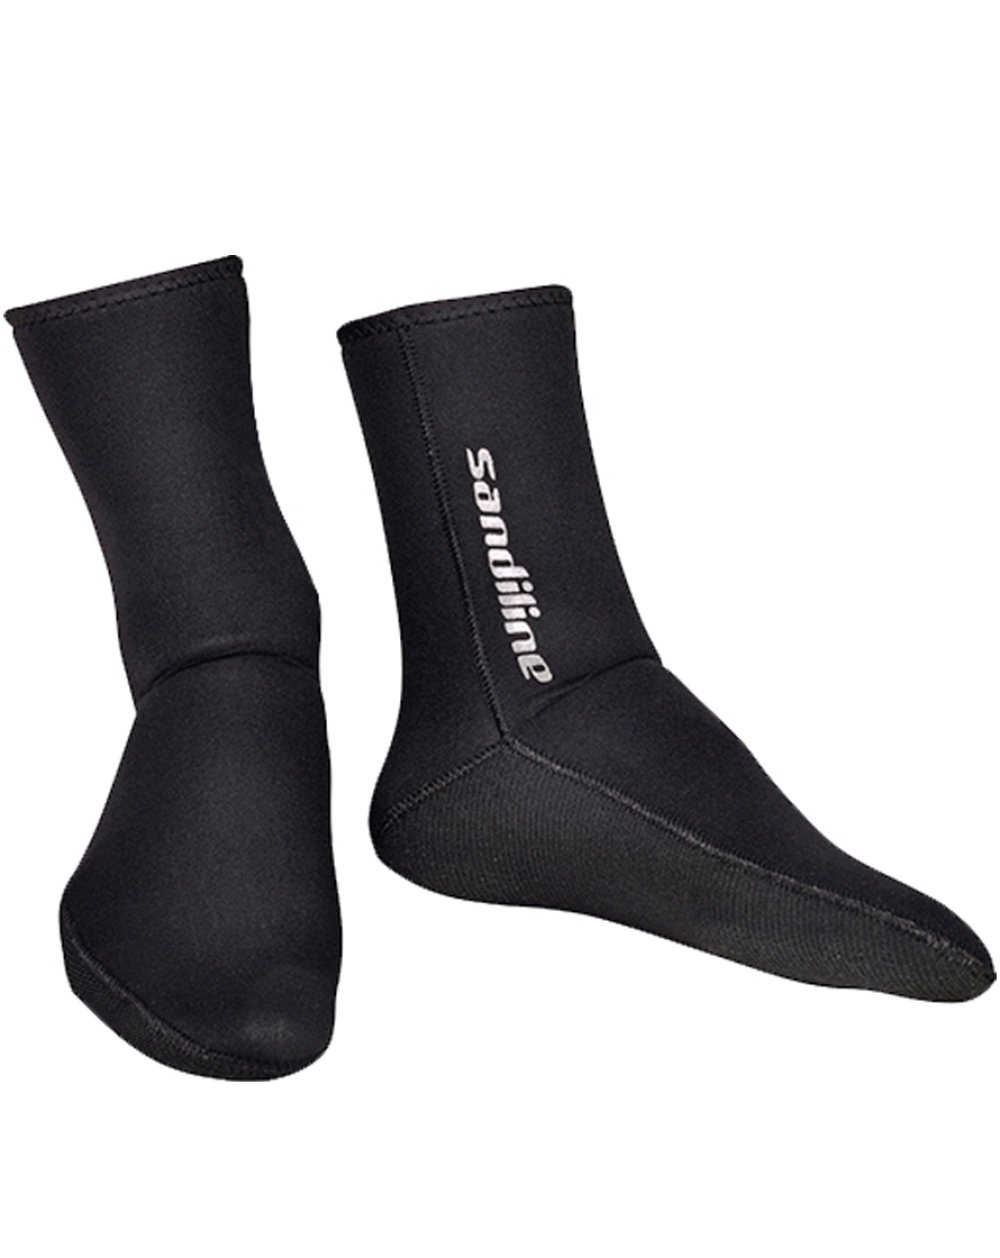 SANDILINE Socks Splash 30 - Gr. 46/47